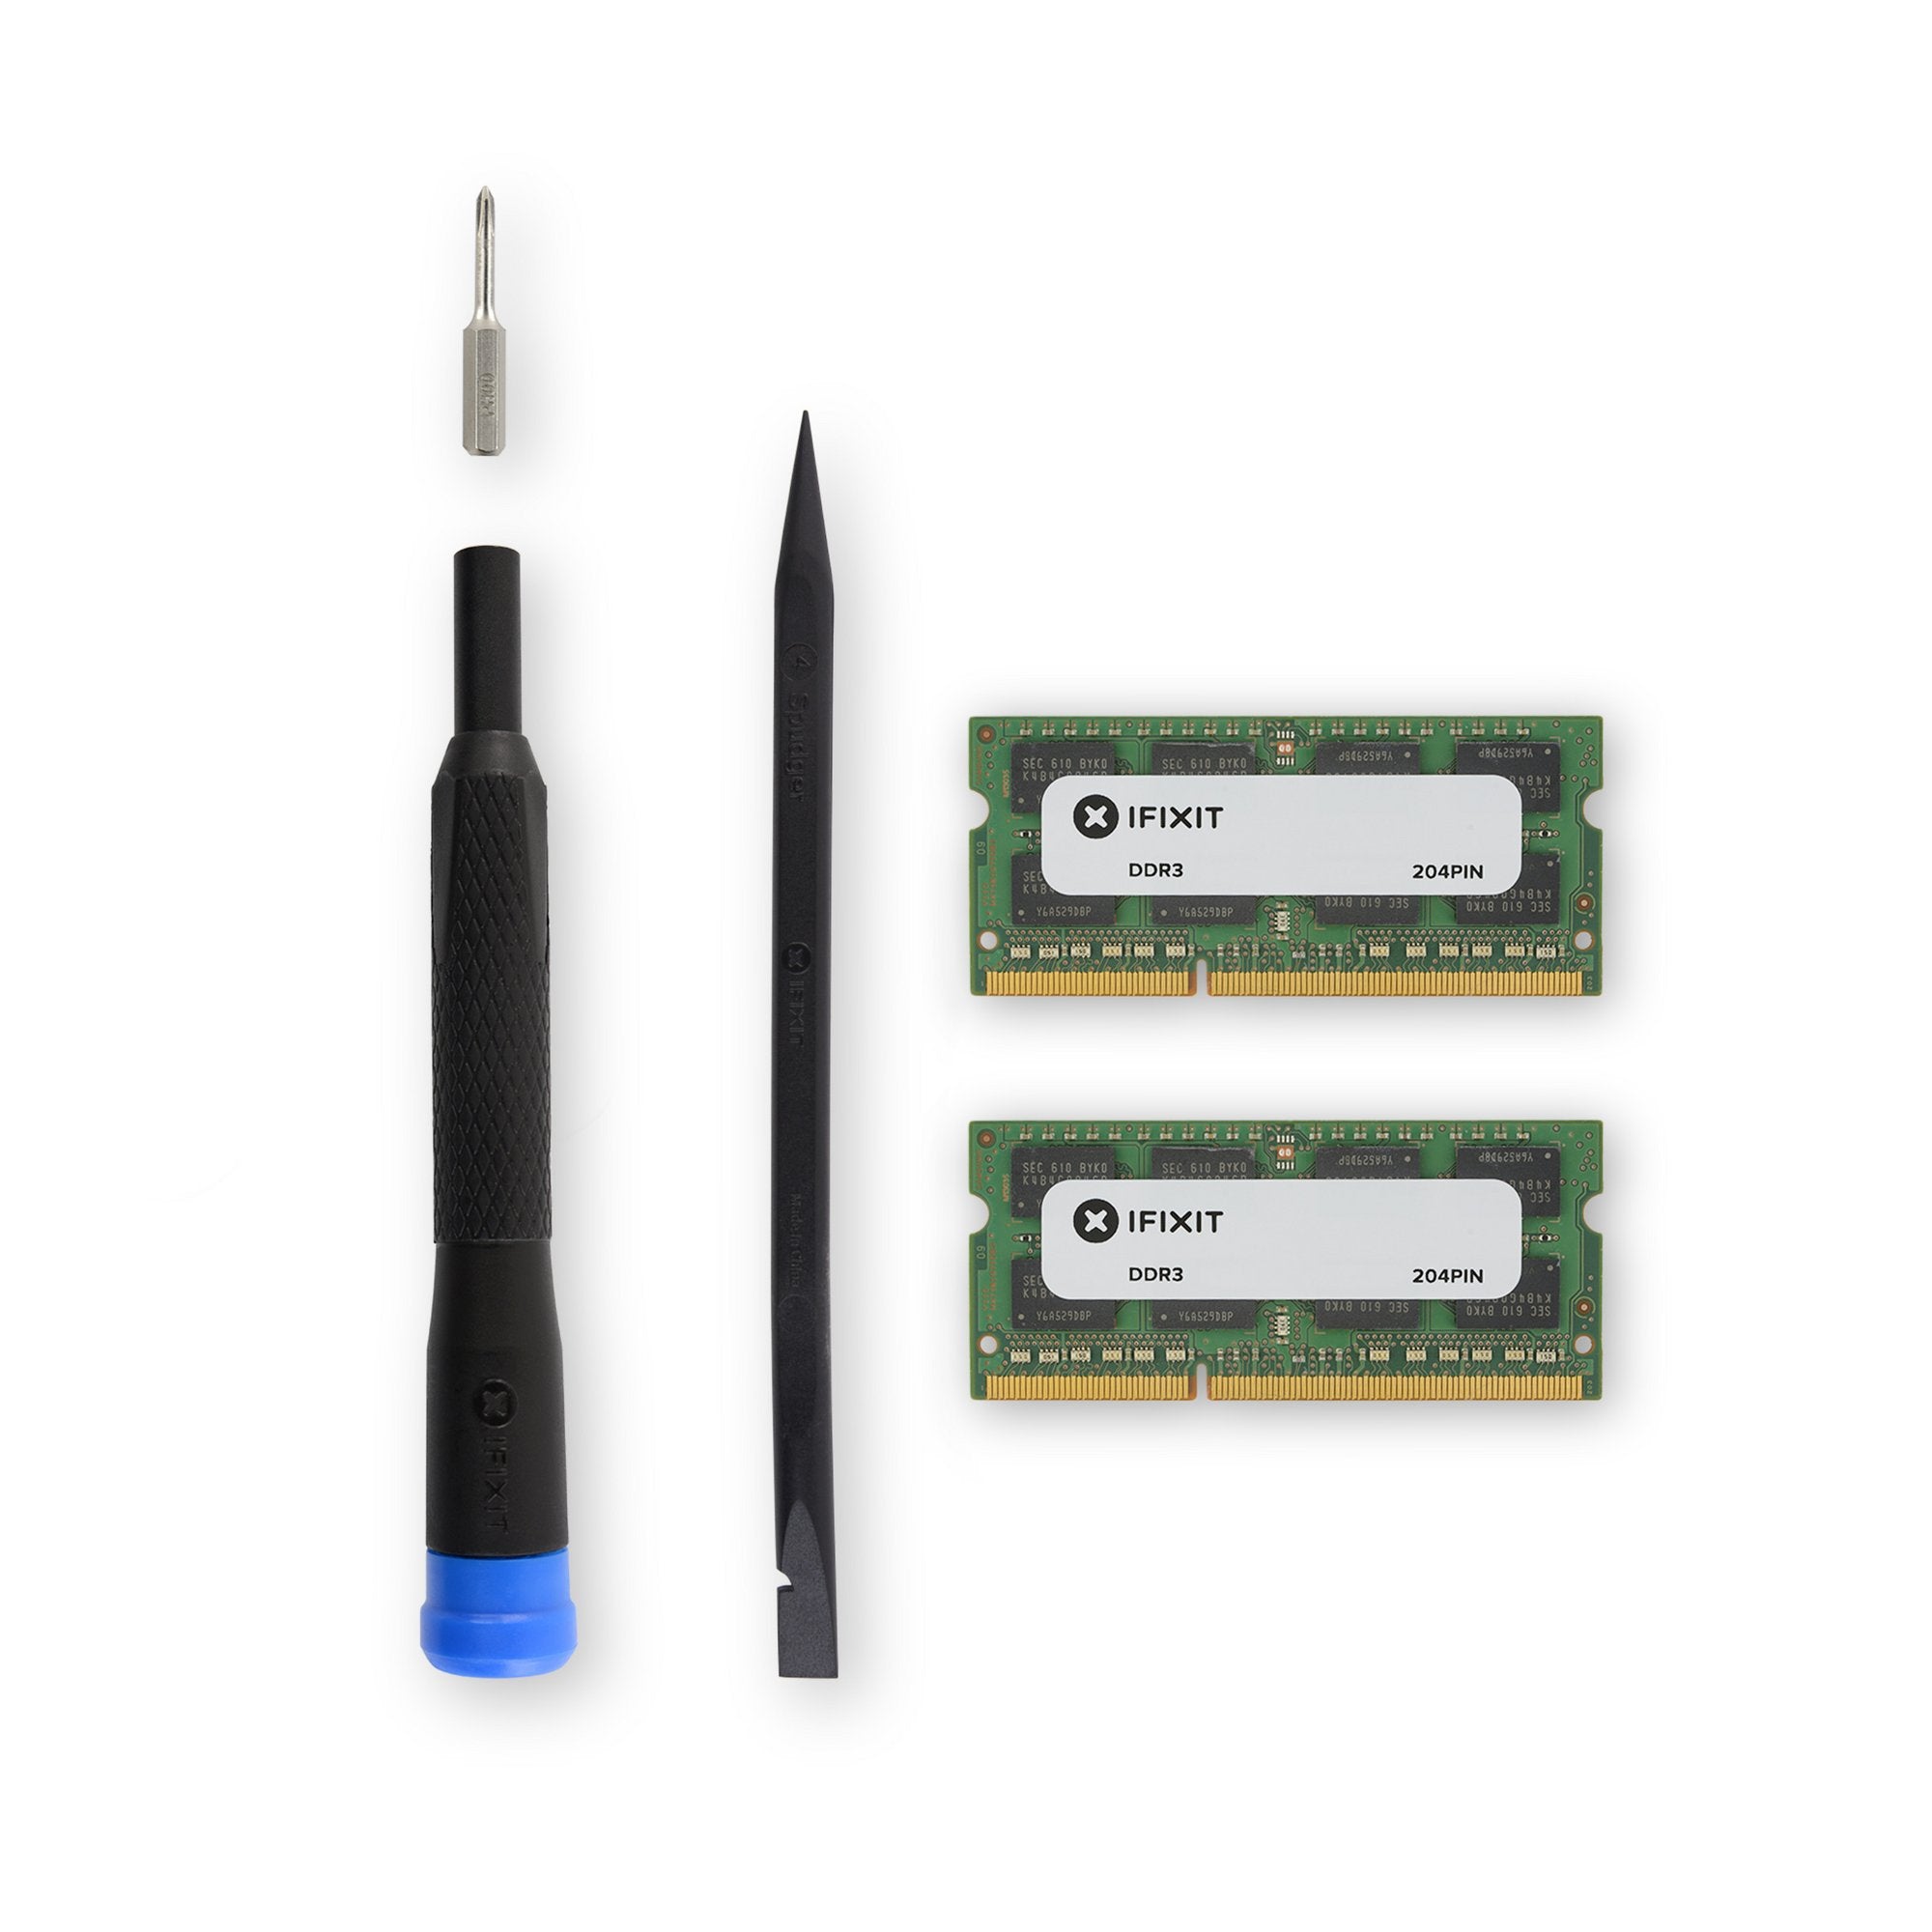 MacBook Pro 15" Unibody (2.53 GHz Mid 2009) Memory Maxxer RAM Upgrade Kit